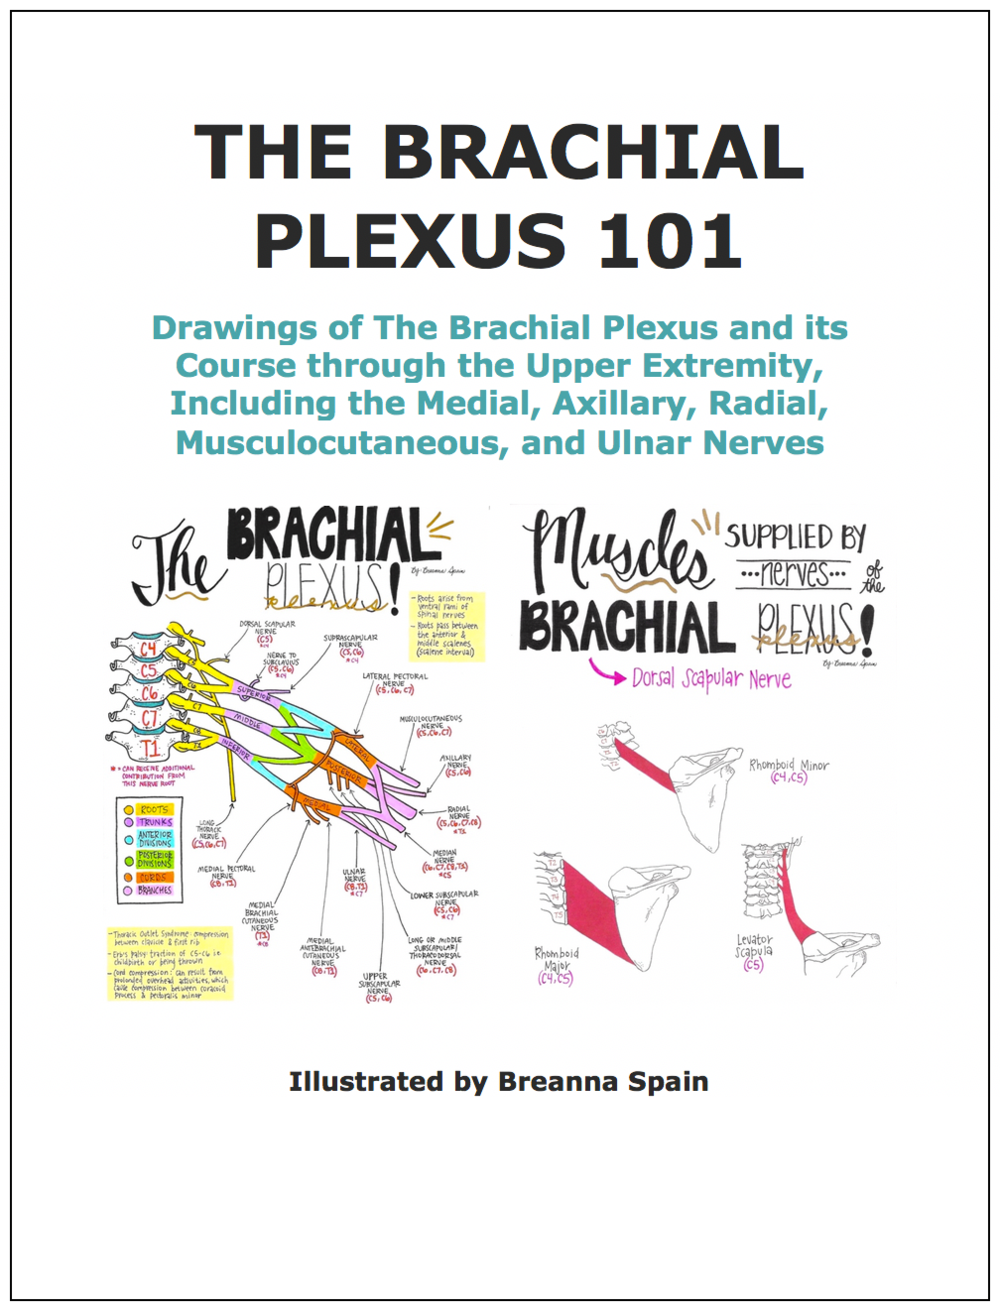 The Brachial Plexus 101